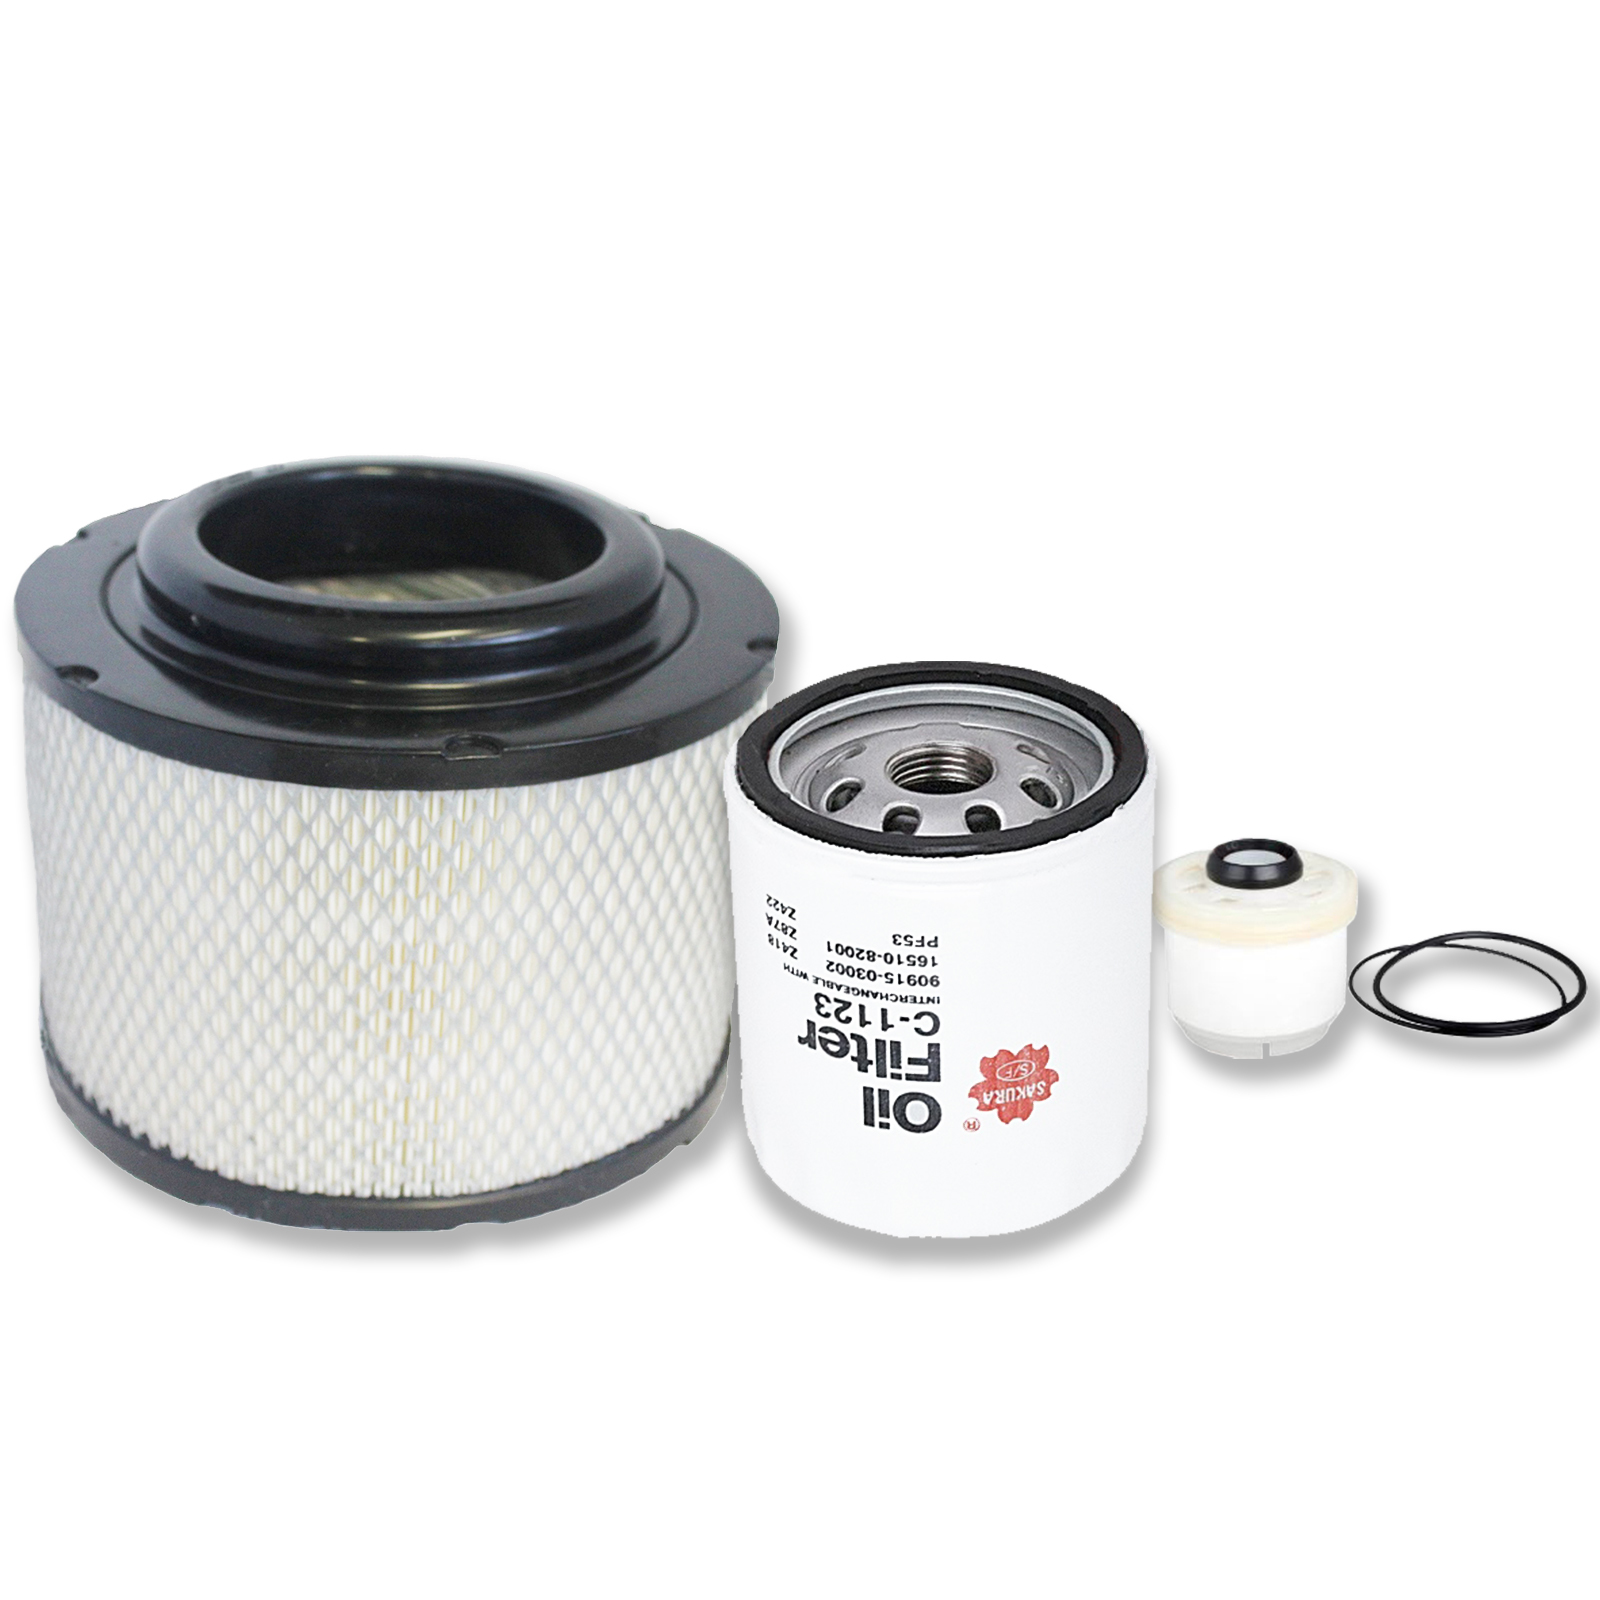 Oil Air Fuel Filter service kit for Toyota Hilux KUN26 3